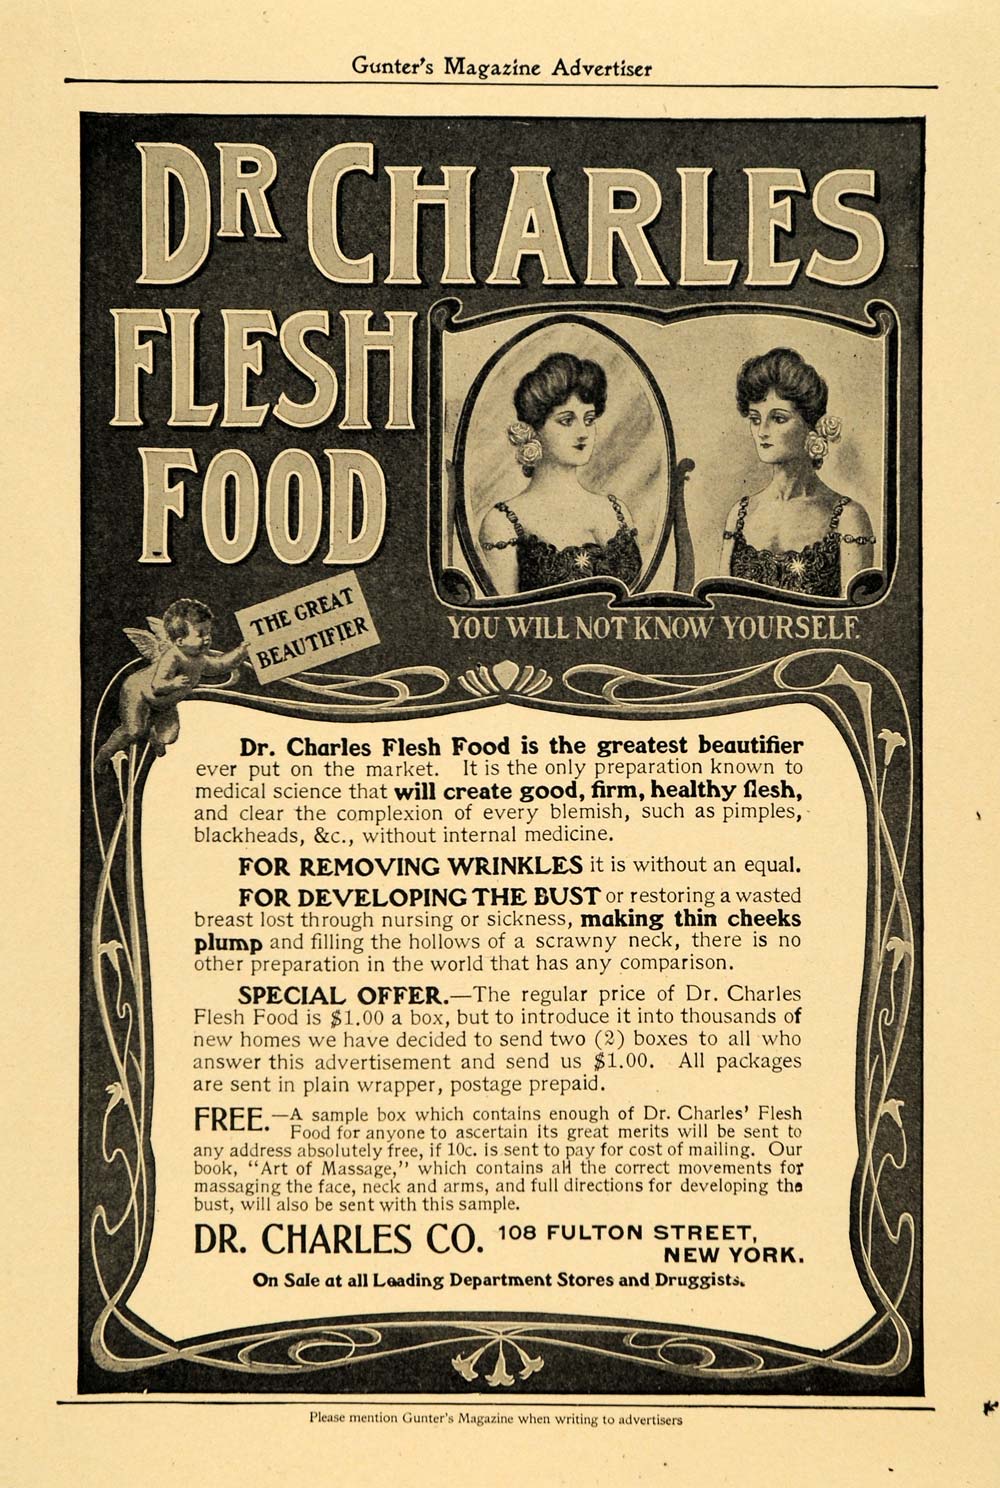 1905 Ad Dr. Charles Co. Flesh Food Beautifier Products - ORIGINAL GUN1